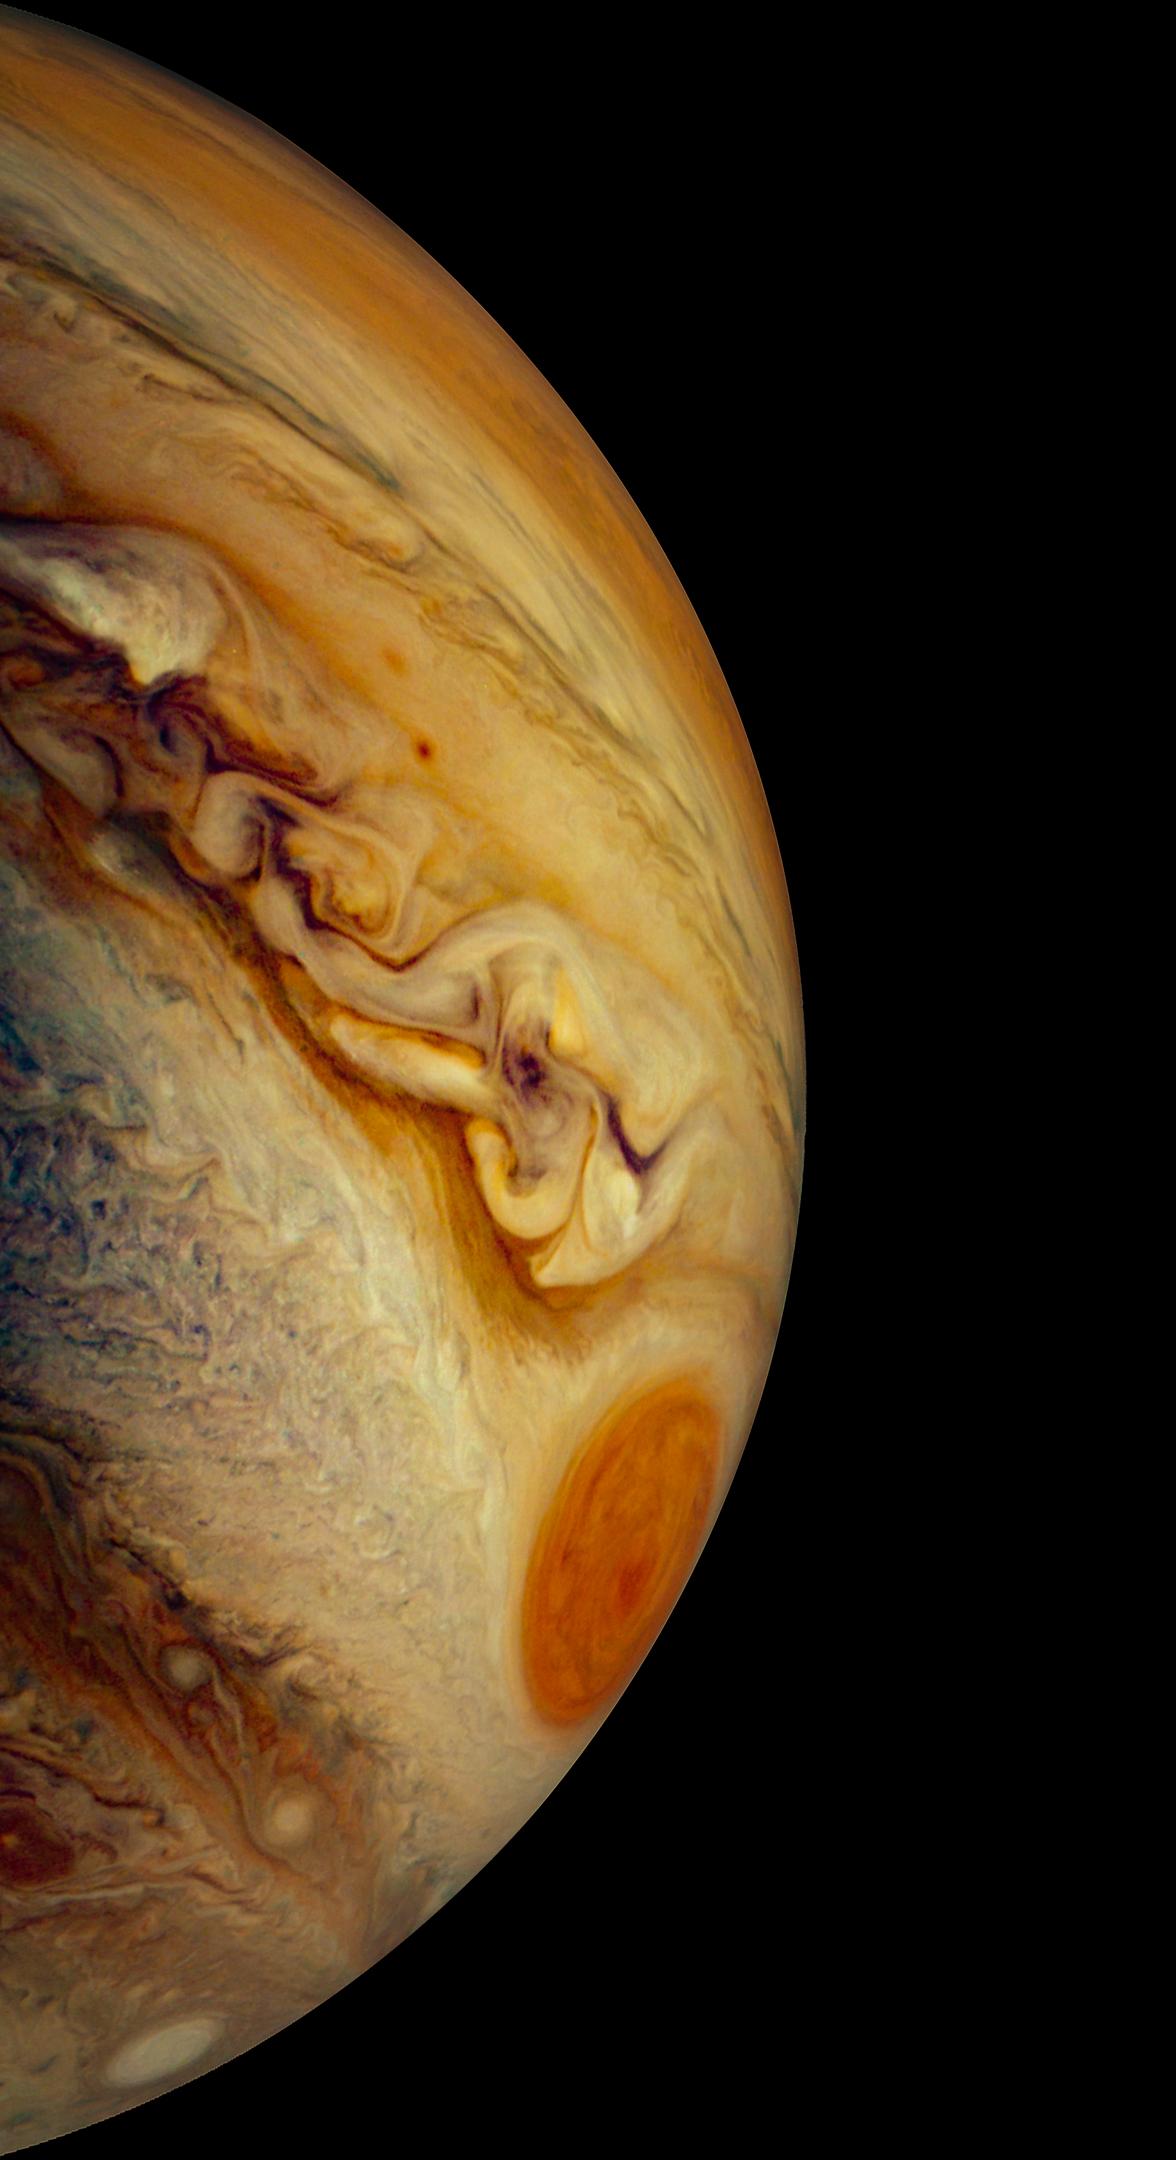 PIA24962: Jupiter's South Temperate Belt